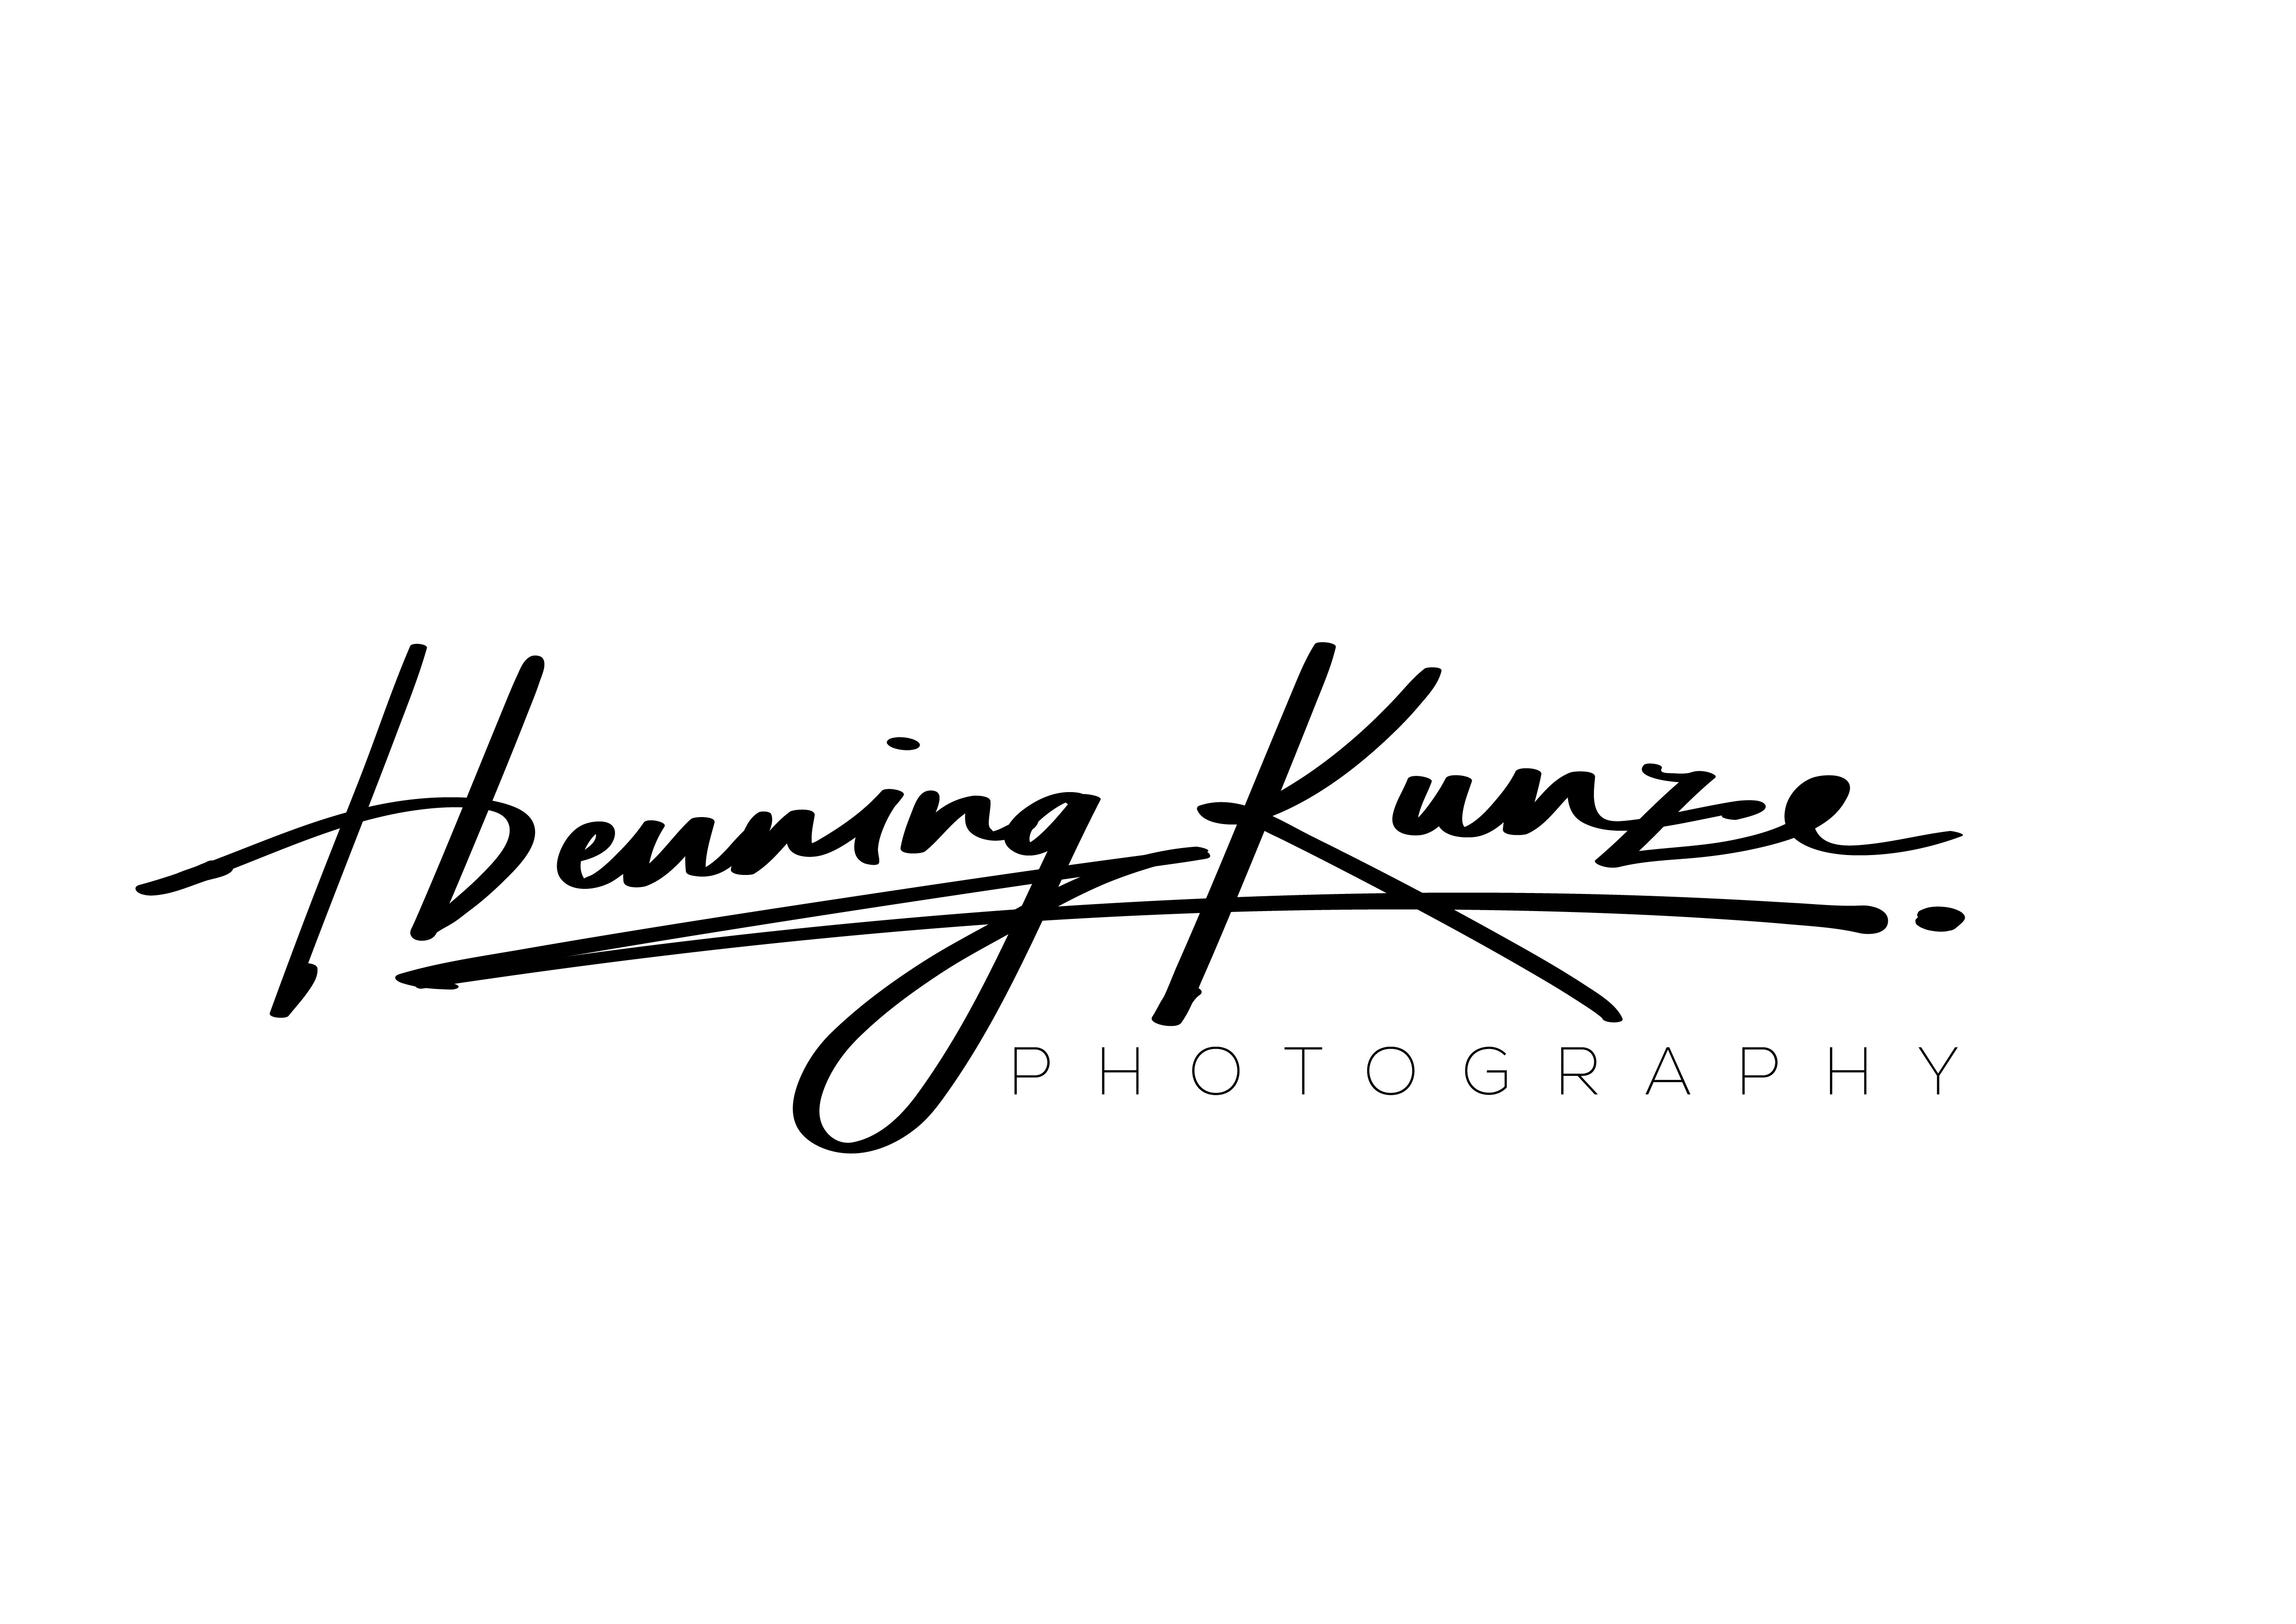 Henning Kunze Photography